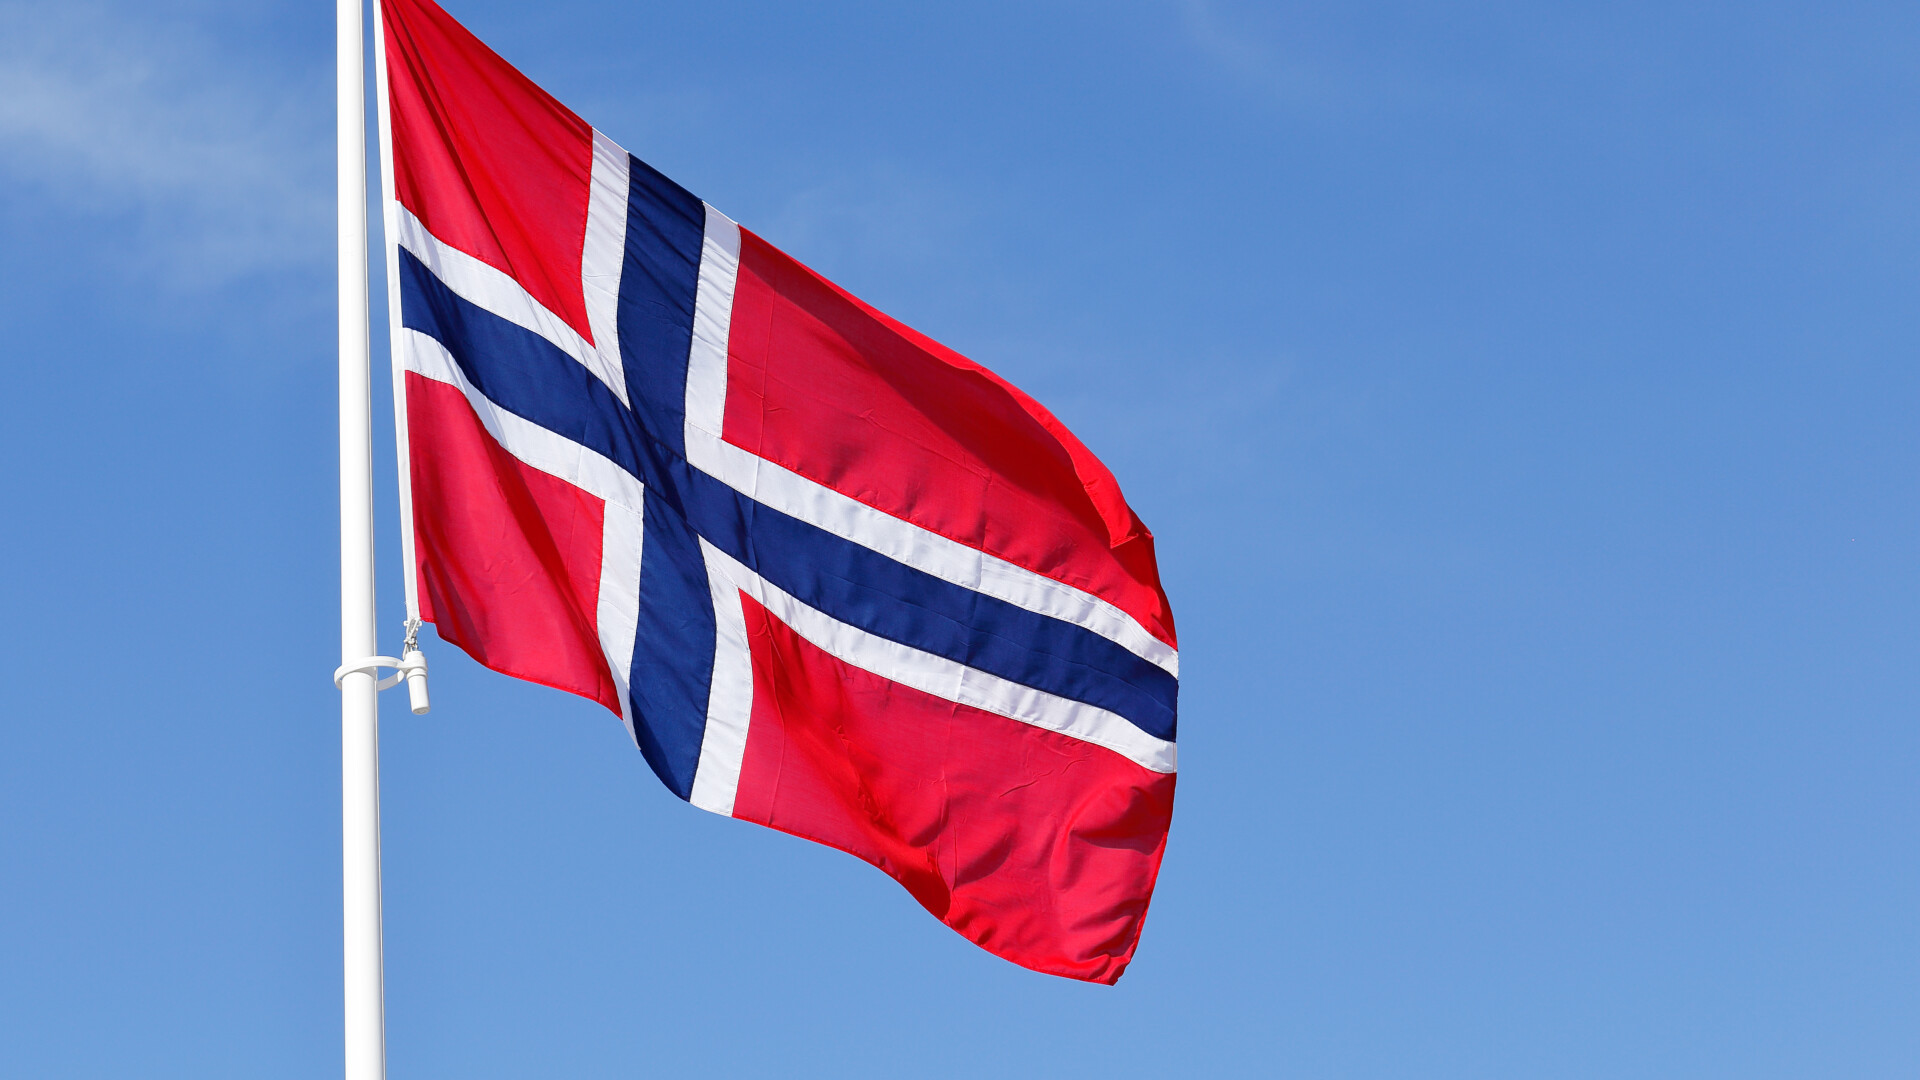 steag norvegia